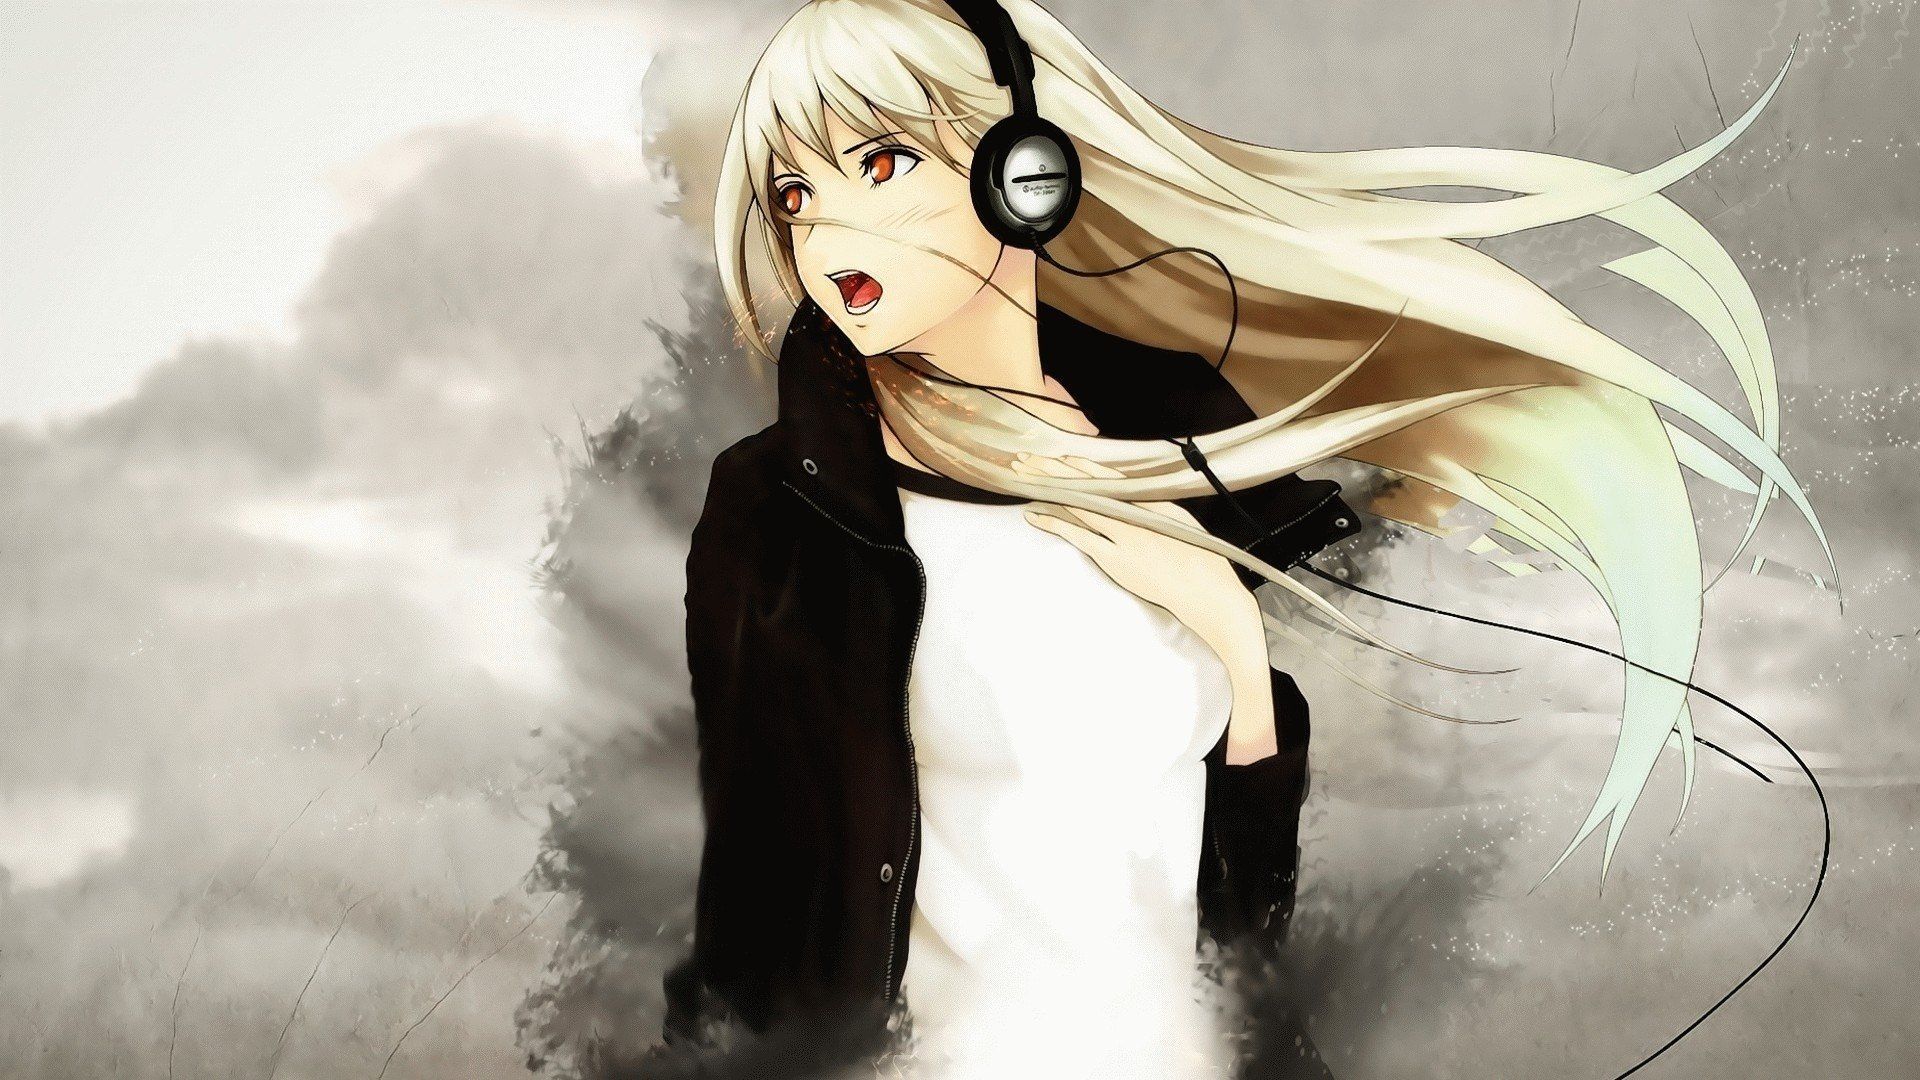 Anime girl with headphone wallpaper 1920x1080 - - High resolution